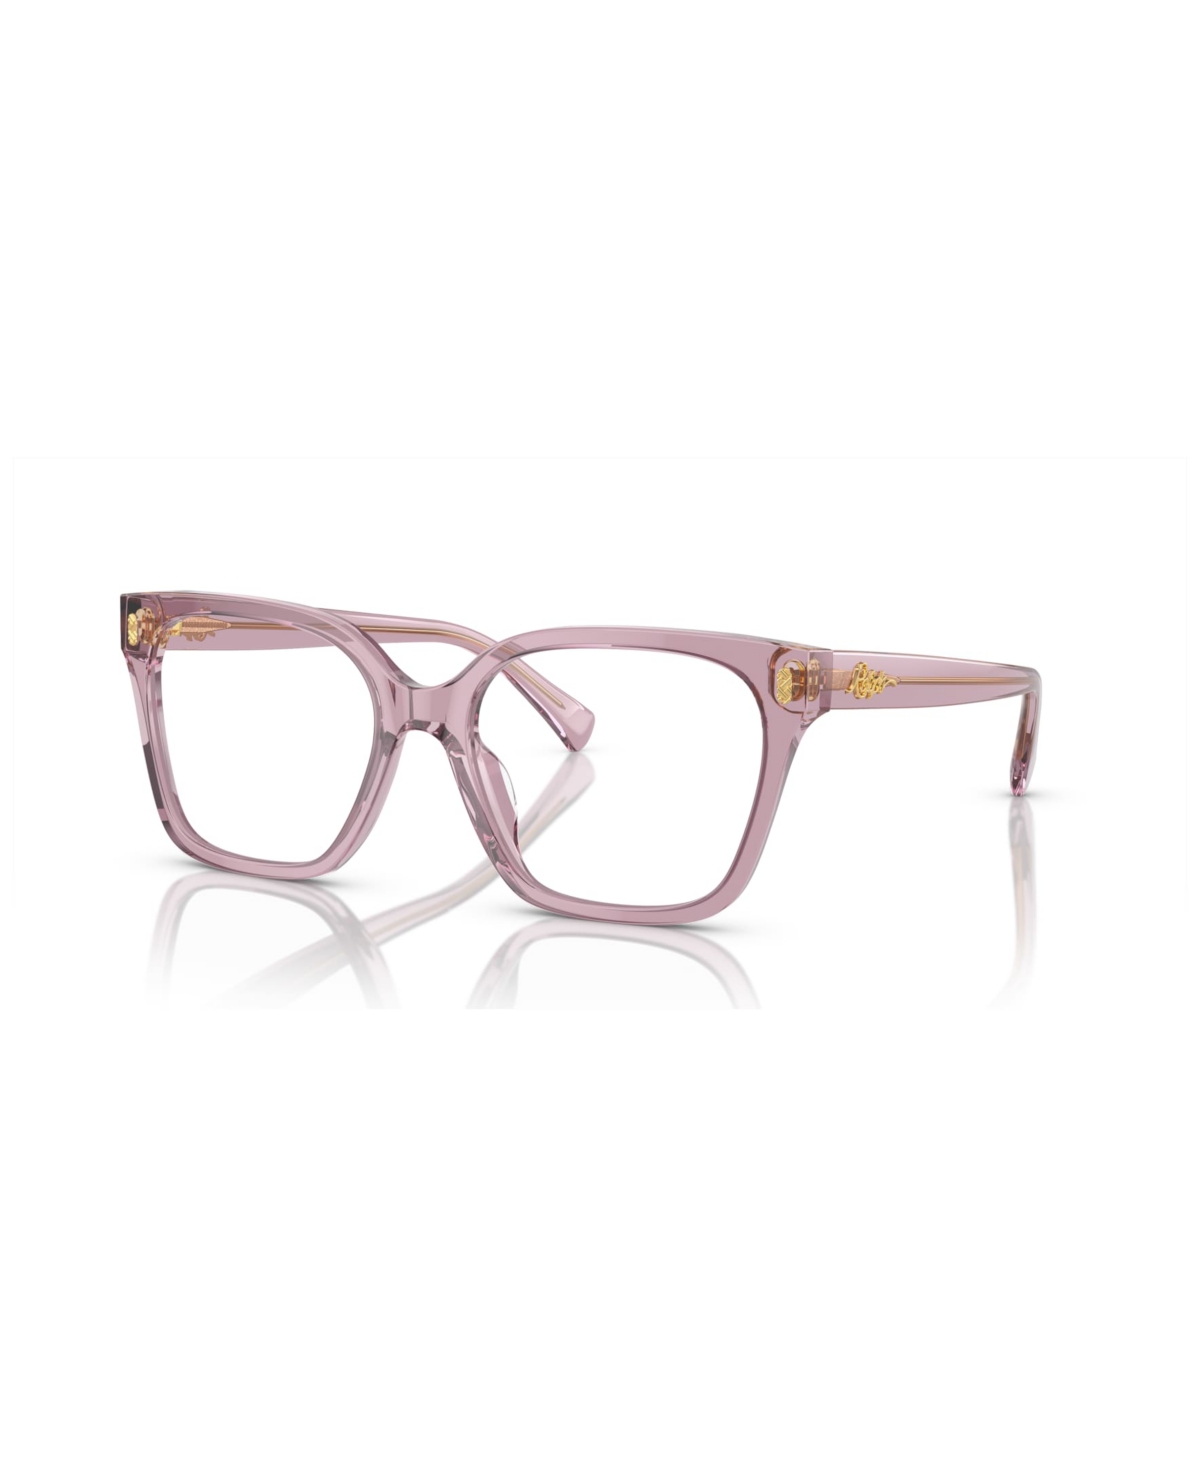 Women's Eyeglasses, RA7158U - Shiny Transparent Beige